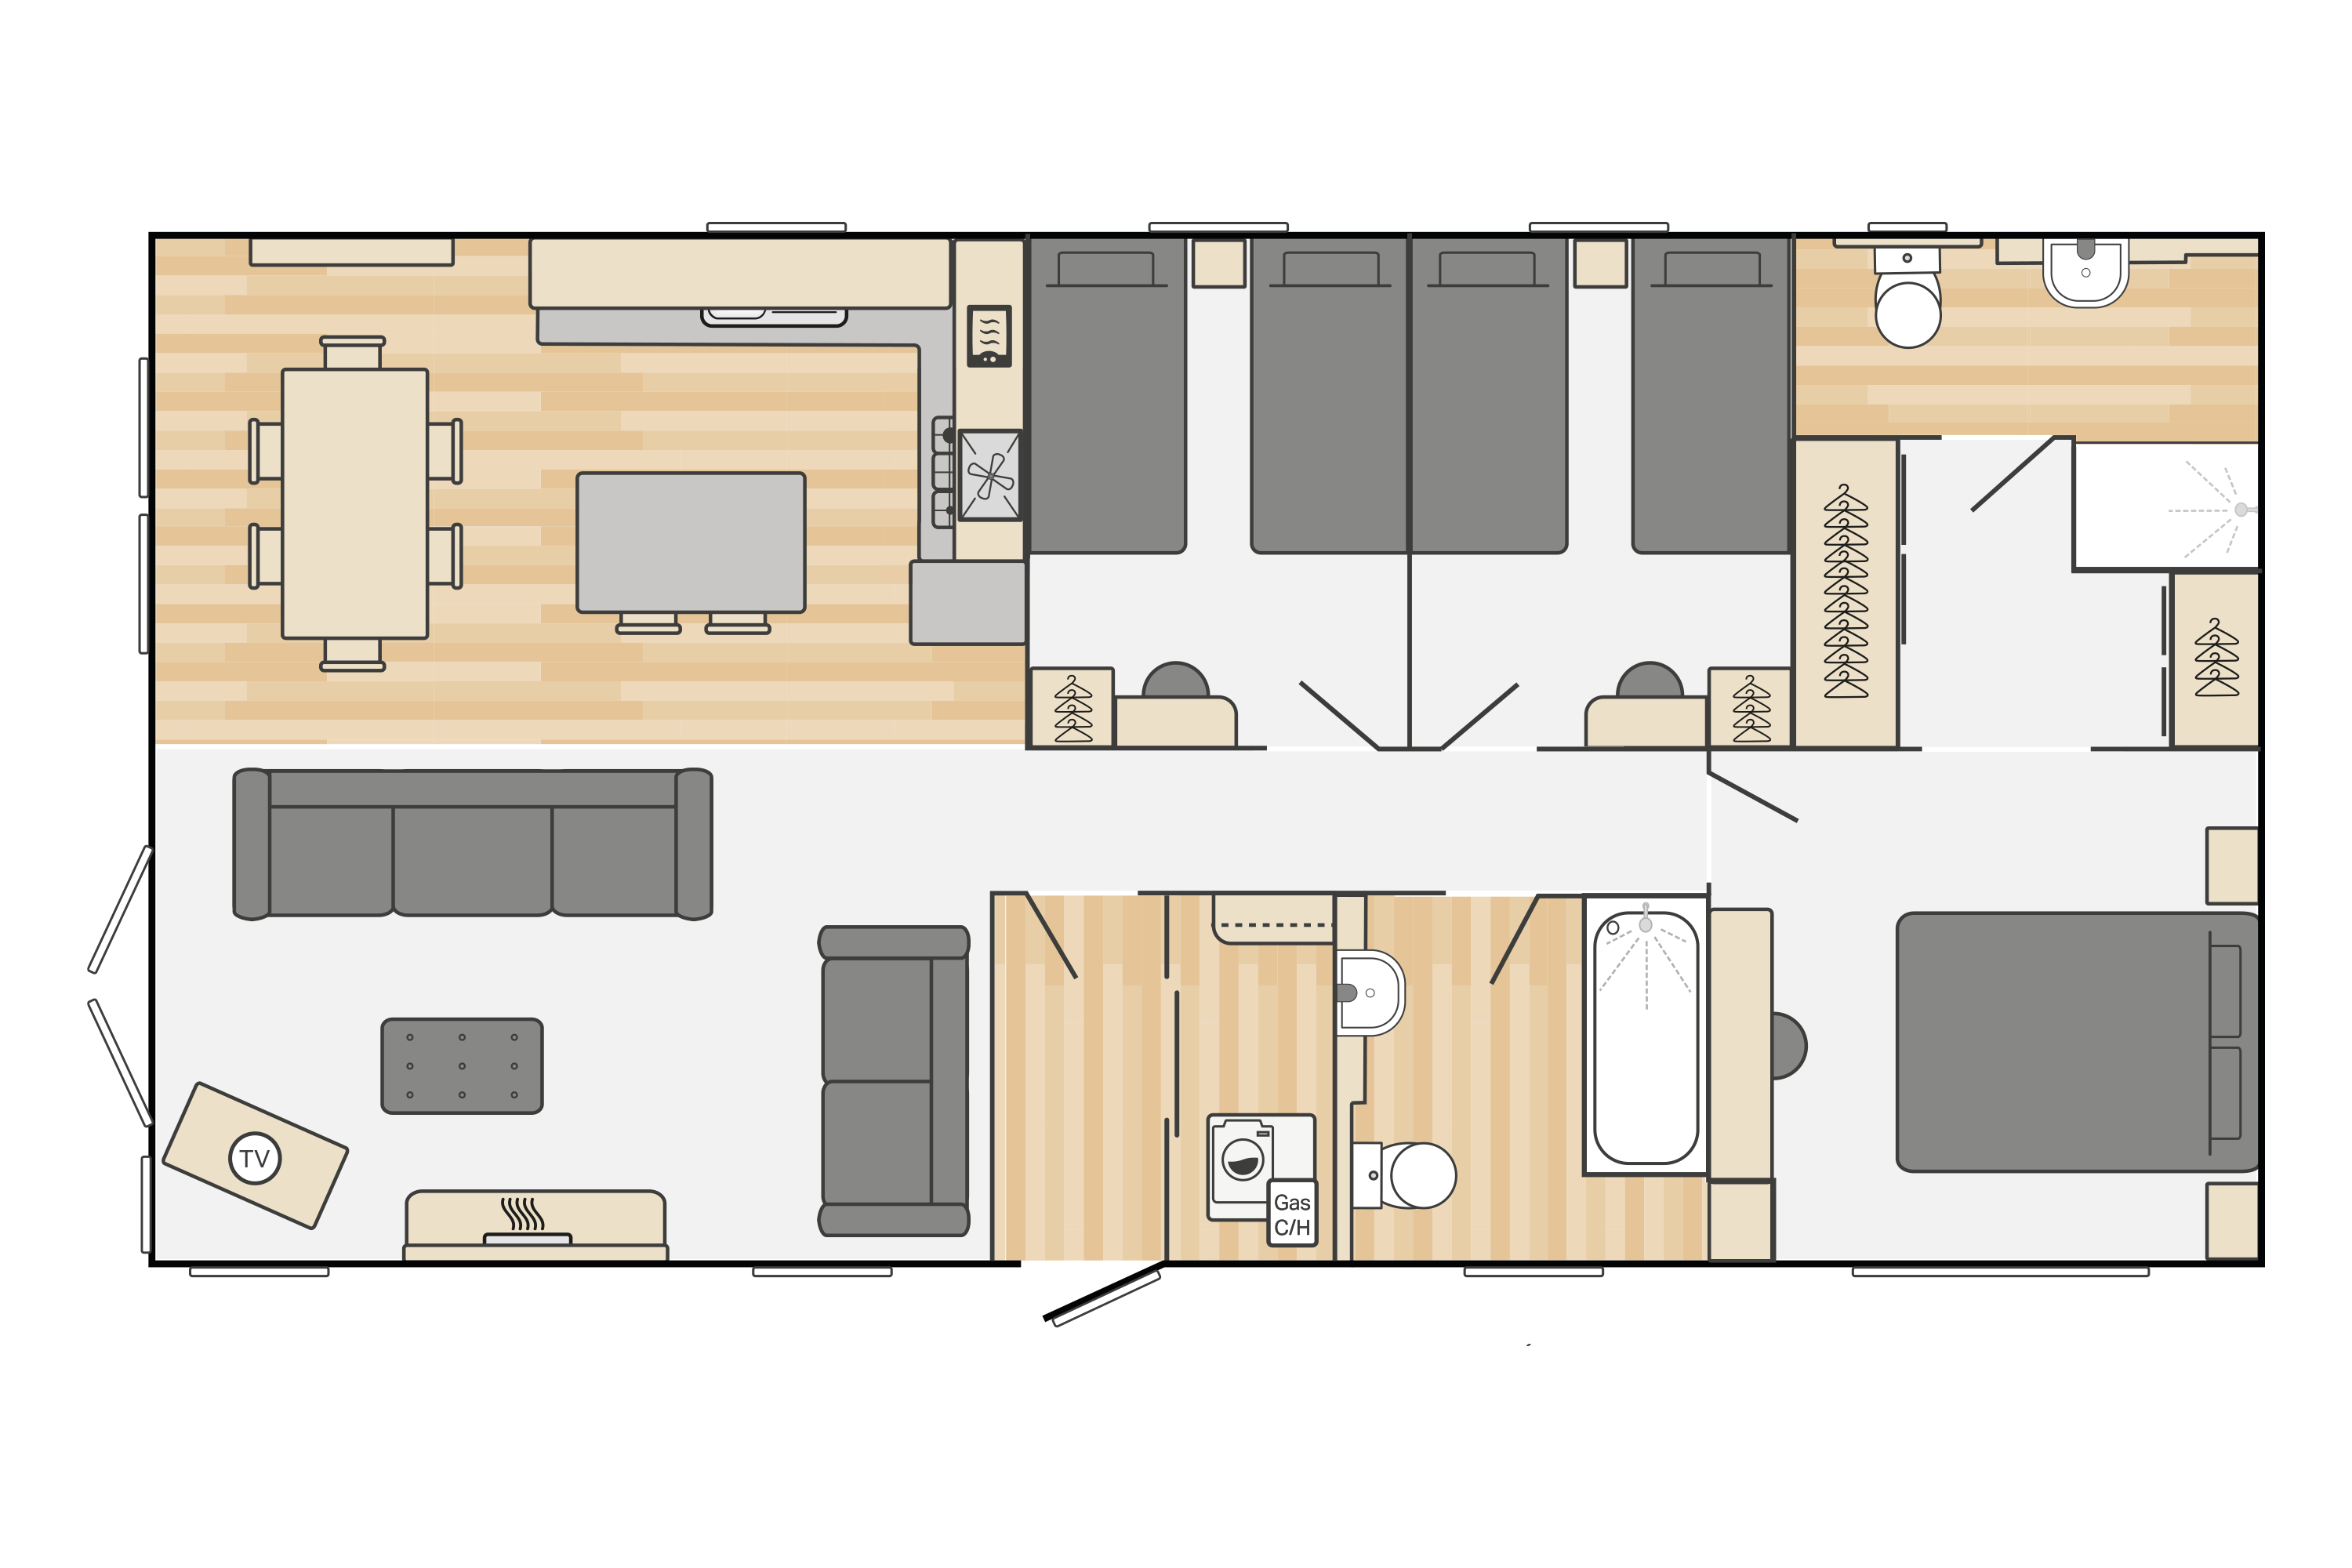 Edmonton Lodge 40' x 20' 3 Bedroom floorplan